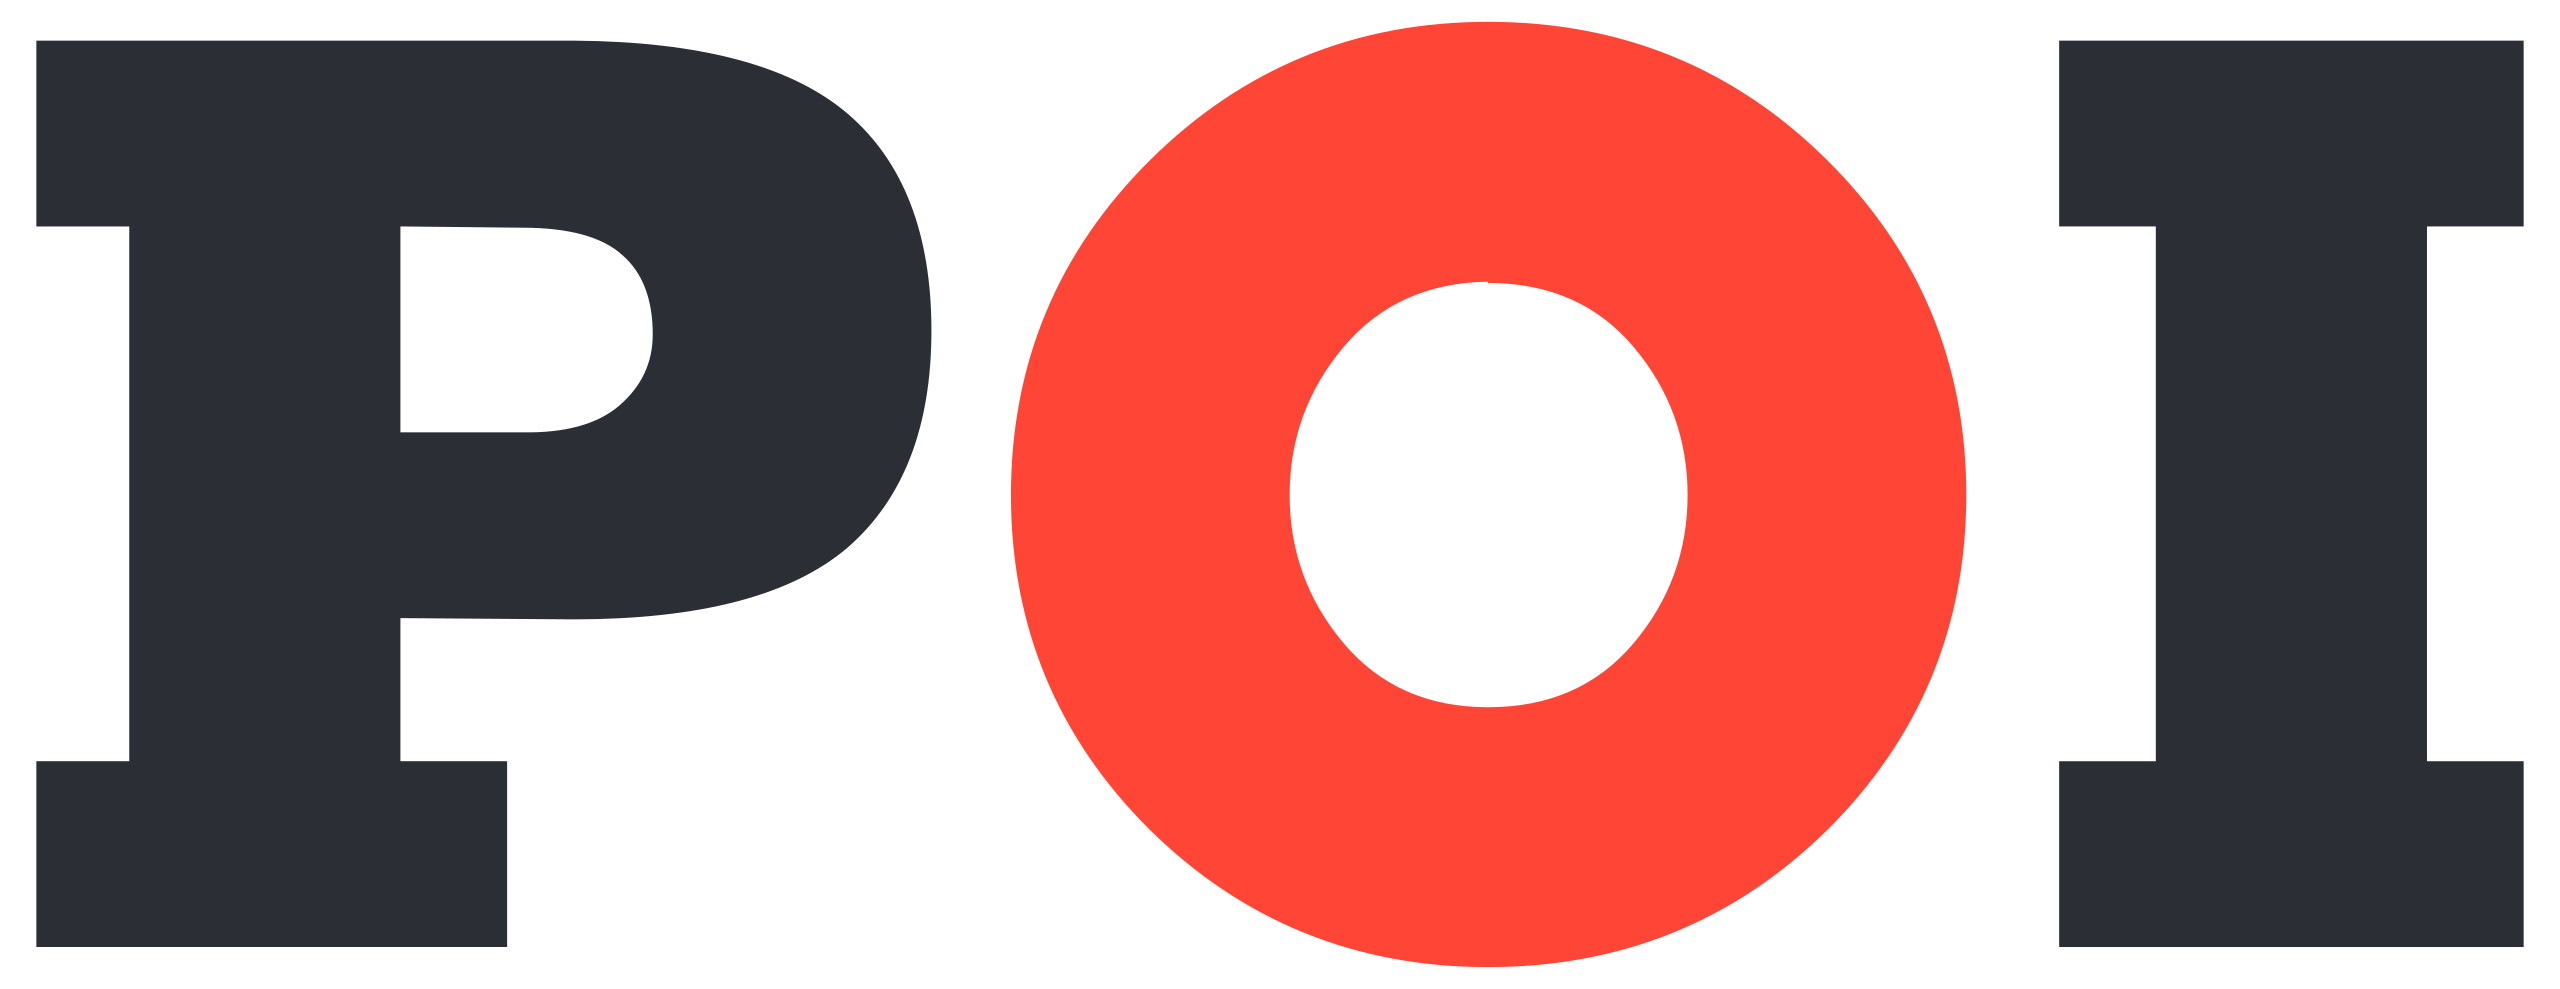 File:Poki logo.svg - Wikimedia Commons